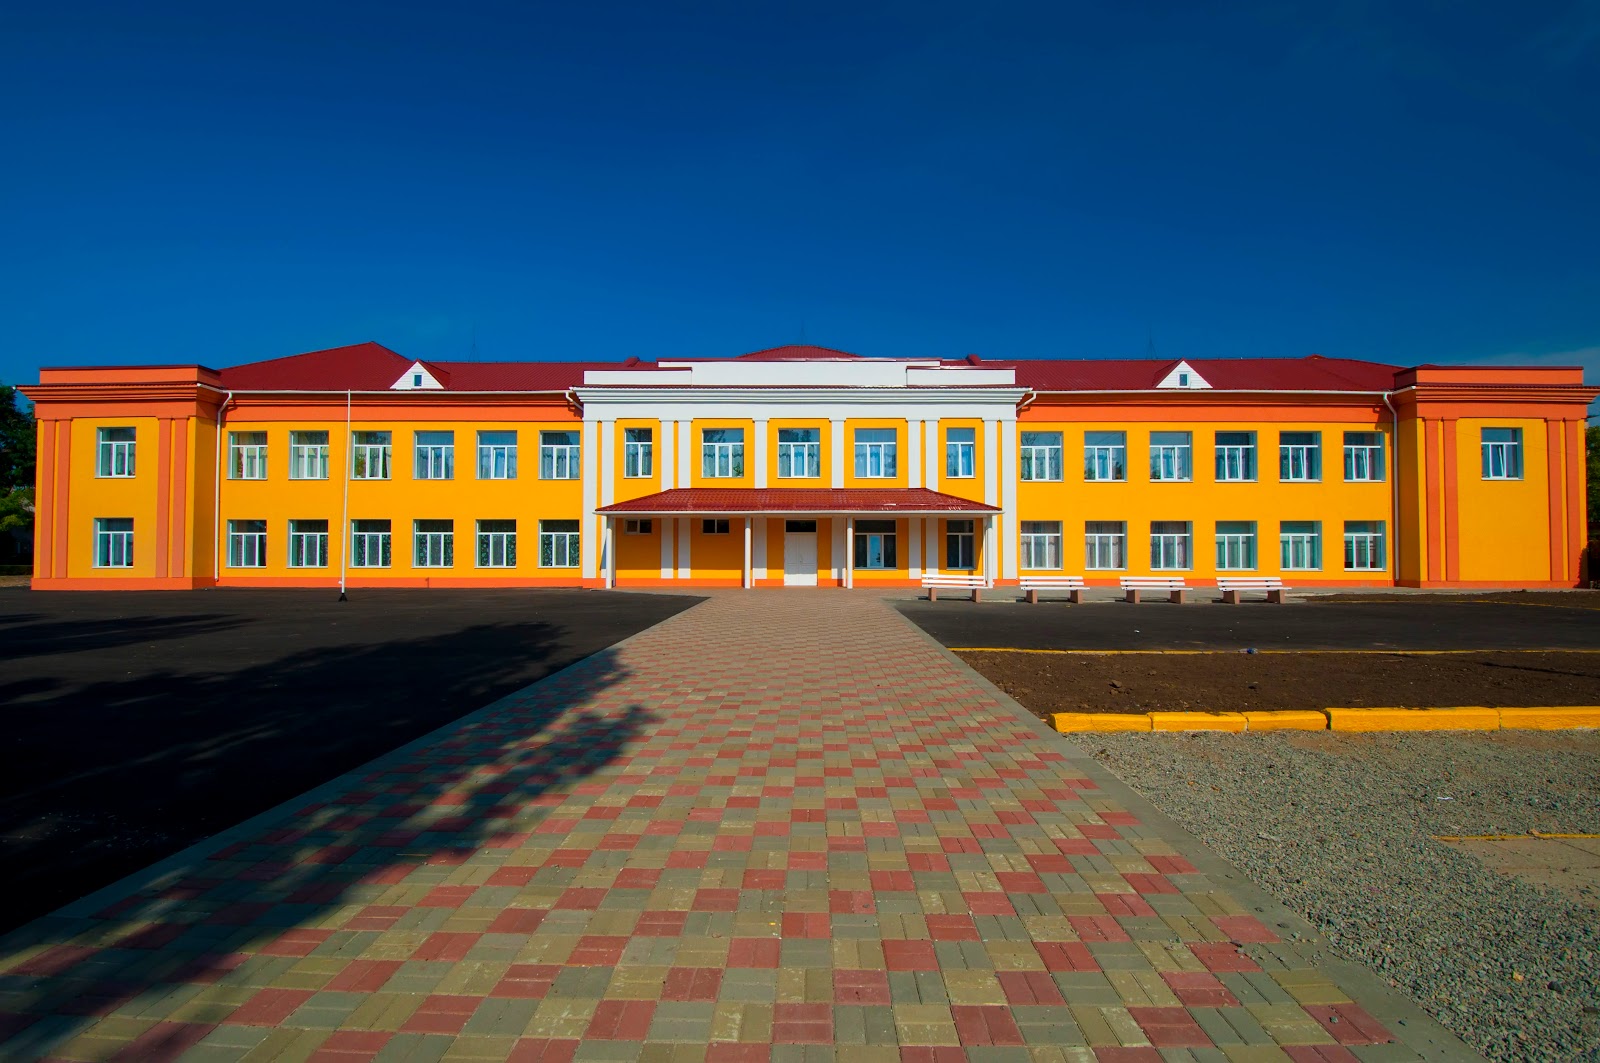 Фотография школы дома. Фасад школы. Здание школы. Красивый фасад школы. Фасад здания школы.